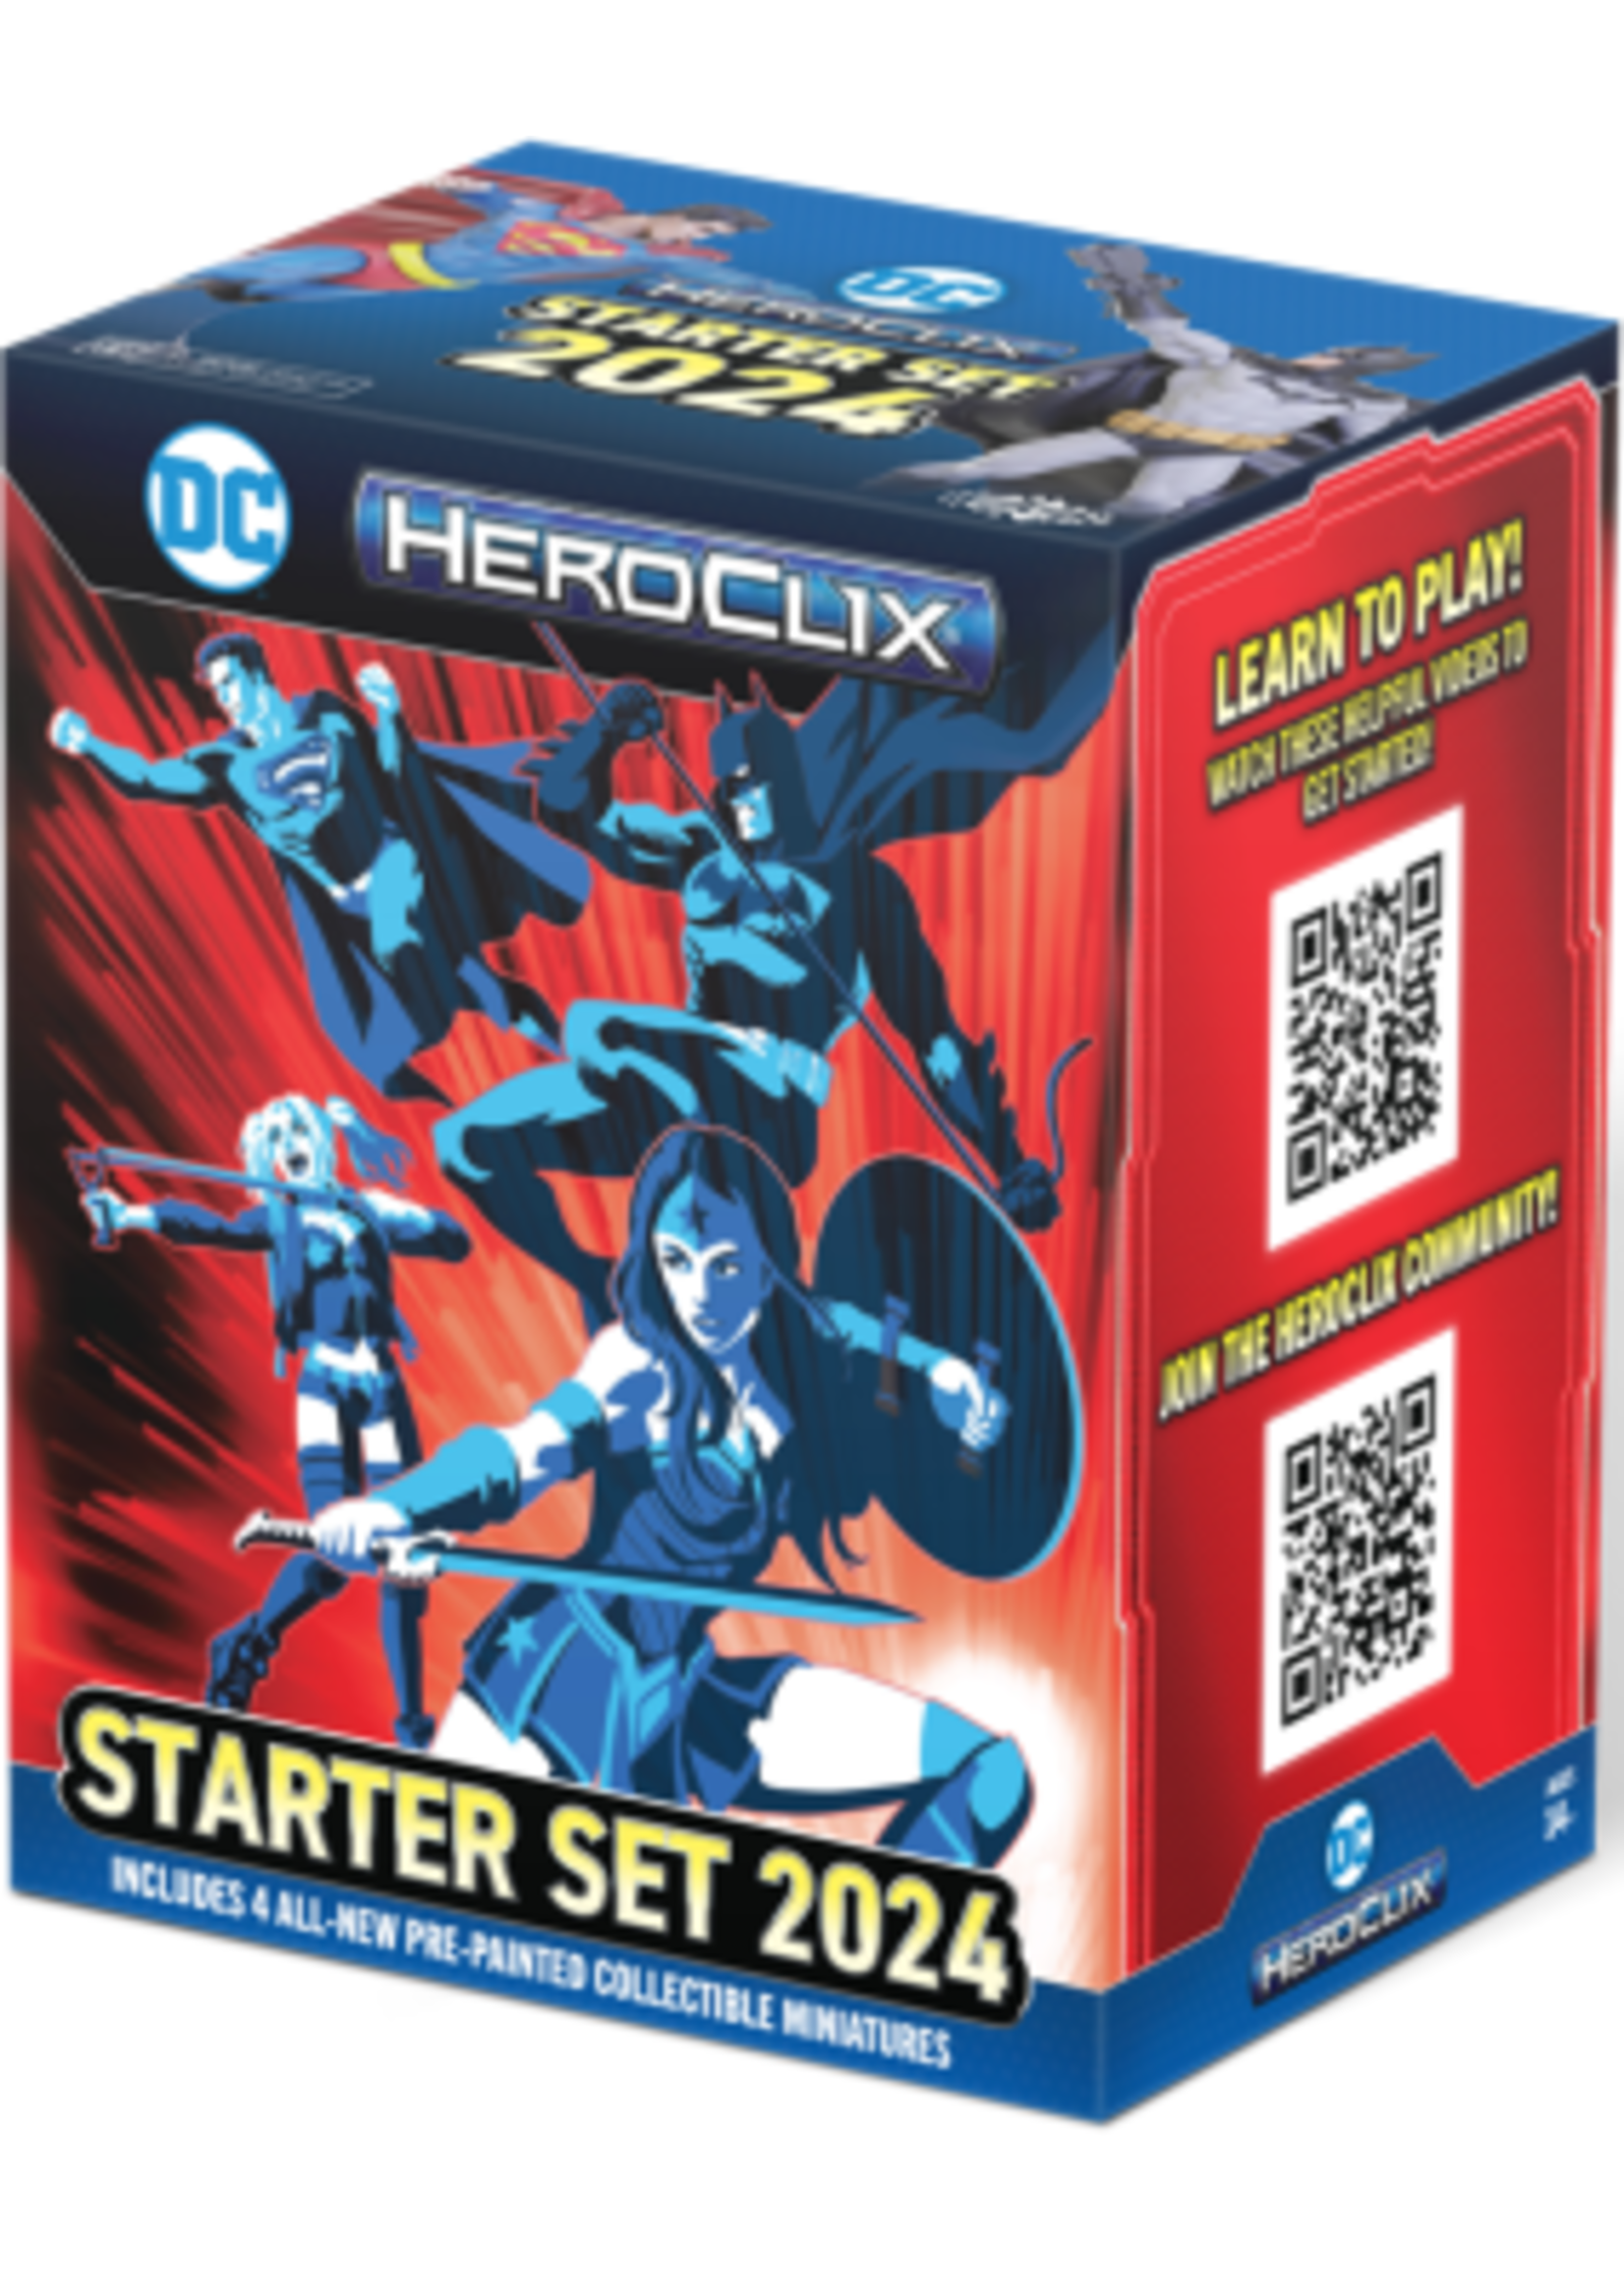 DC HEROCLIX STARTER SET 2024